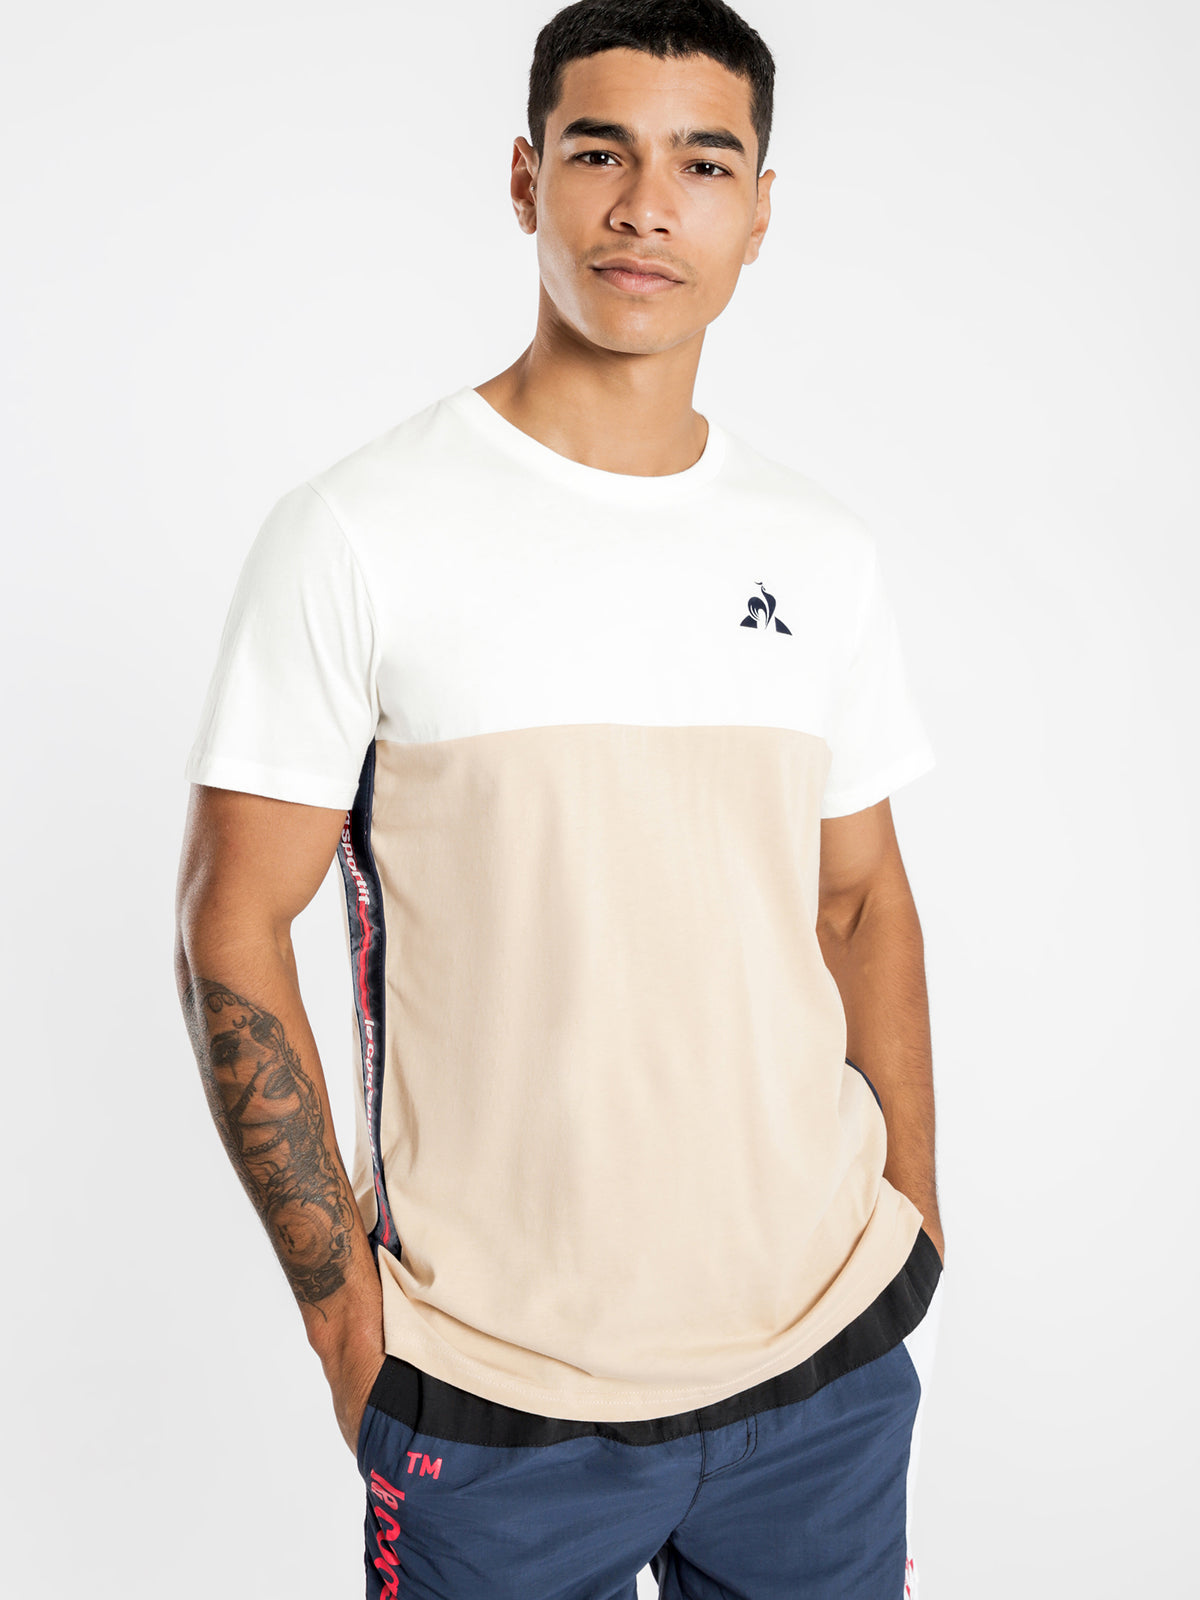 Le Beman T-Shirt in Cream &amp; White